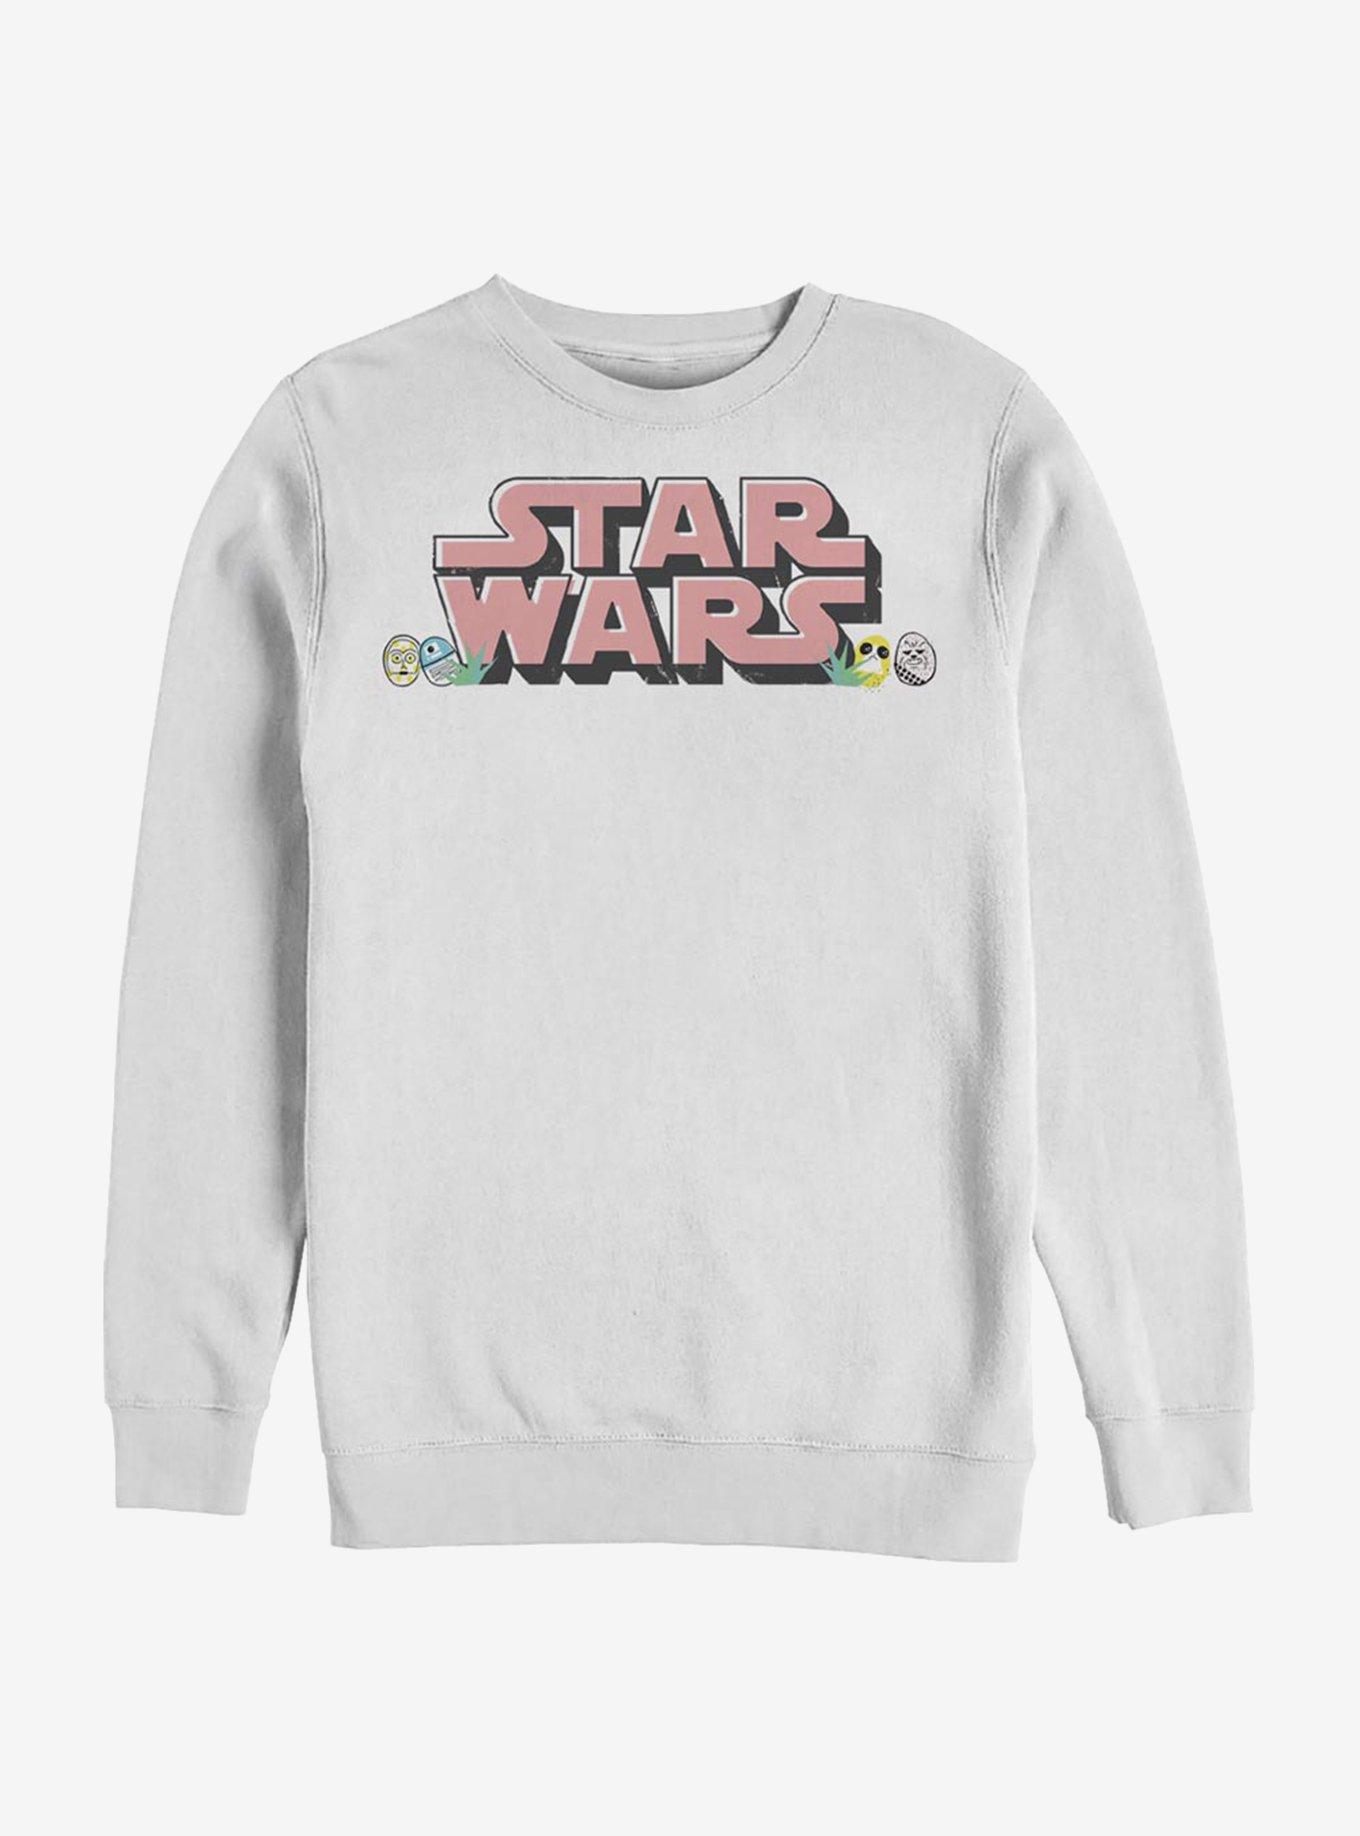 Star Wars Star Eggs Sweatshirt, WHITE, hi-res